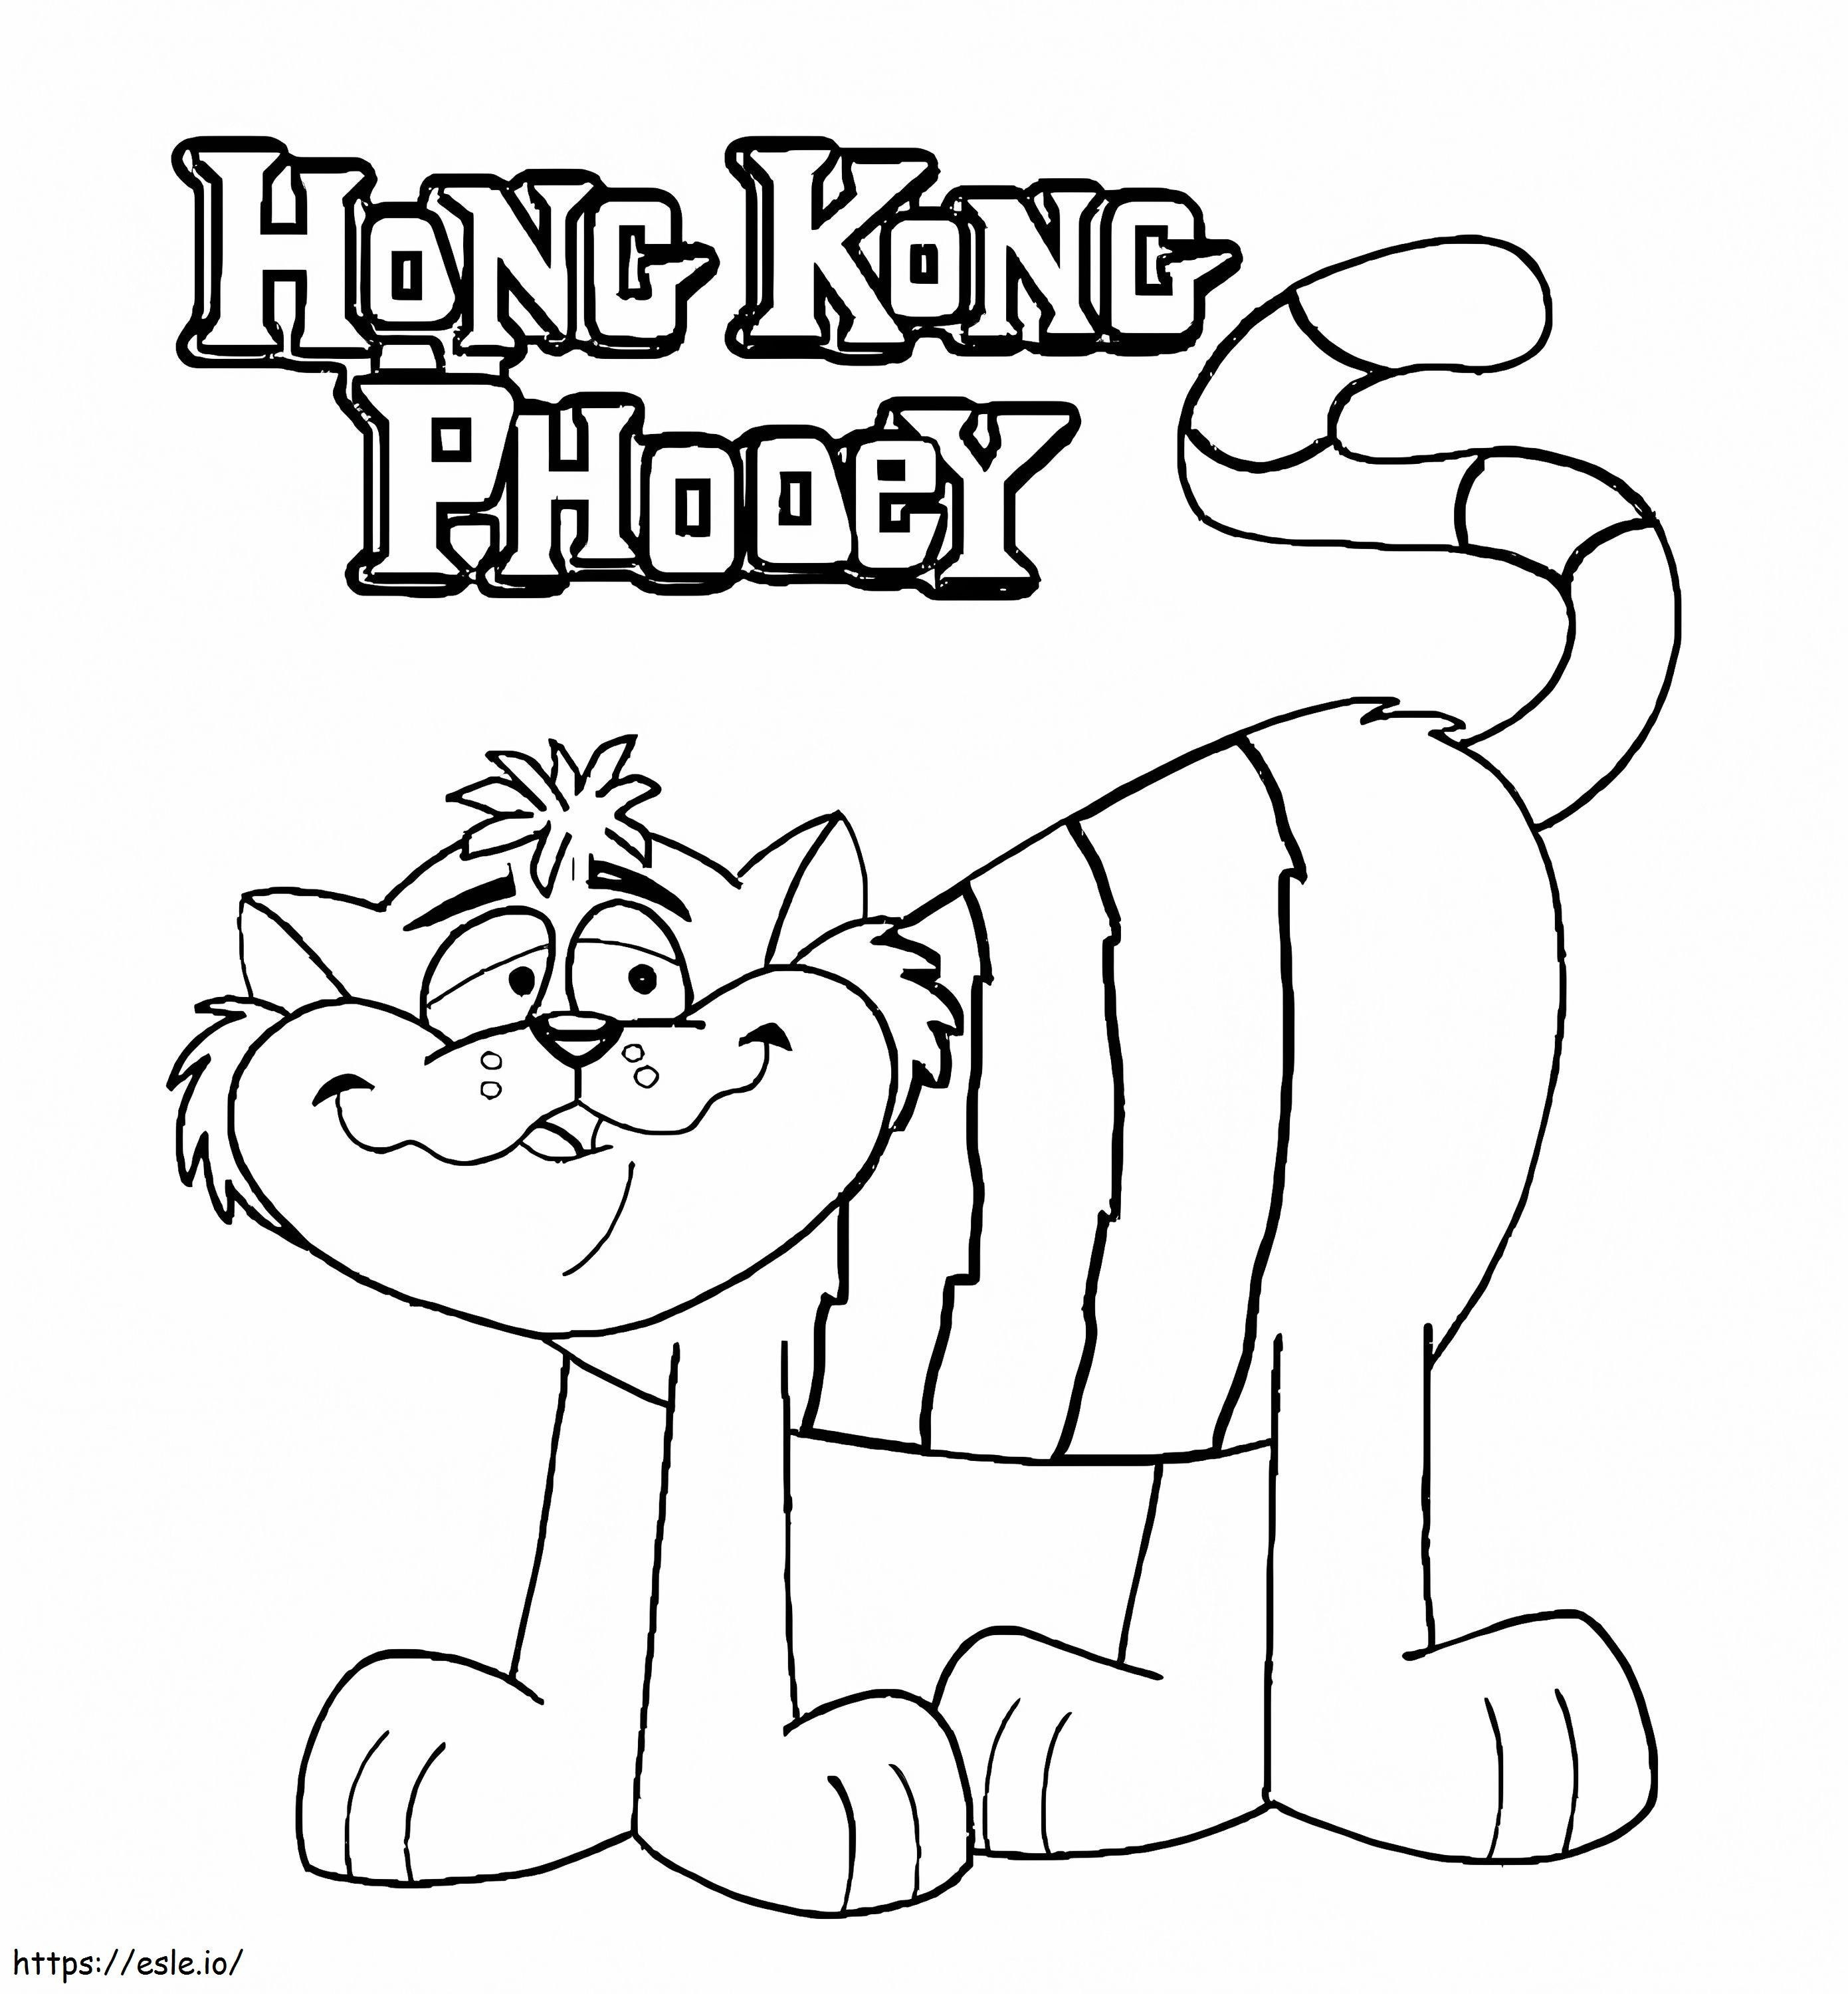 Coloriage Repérer Hong Kong Phooey à imprimer dessin